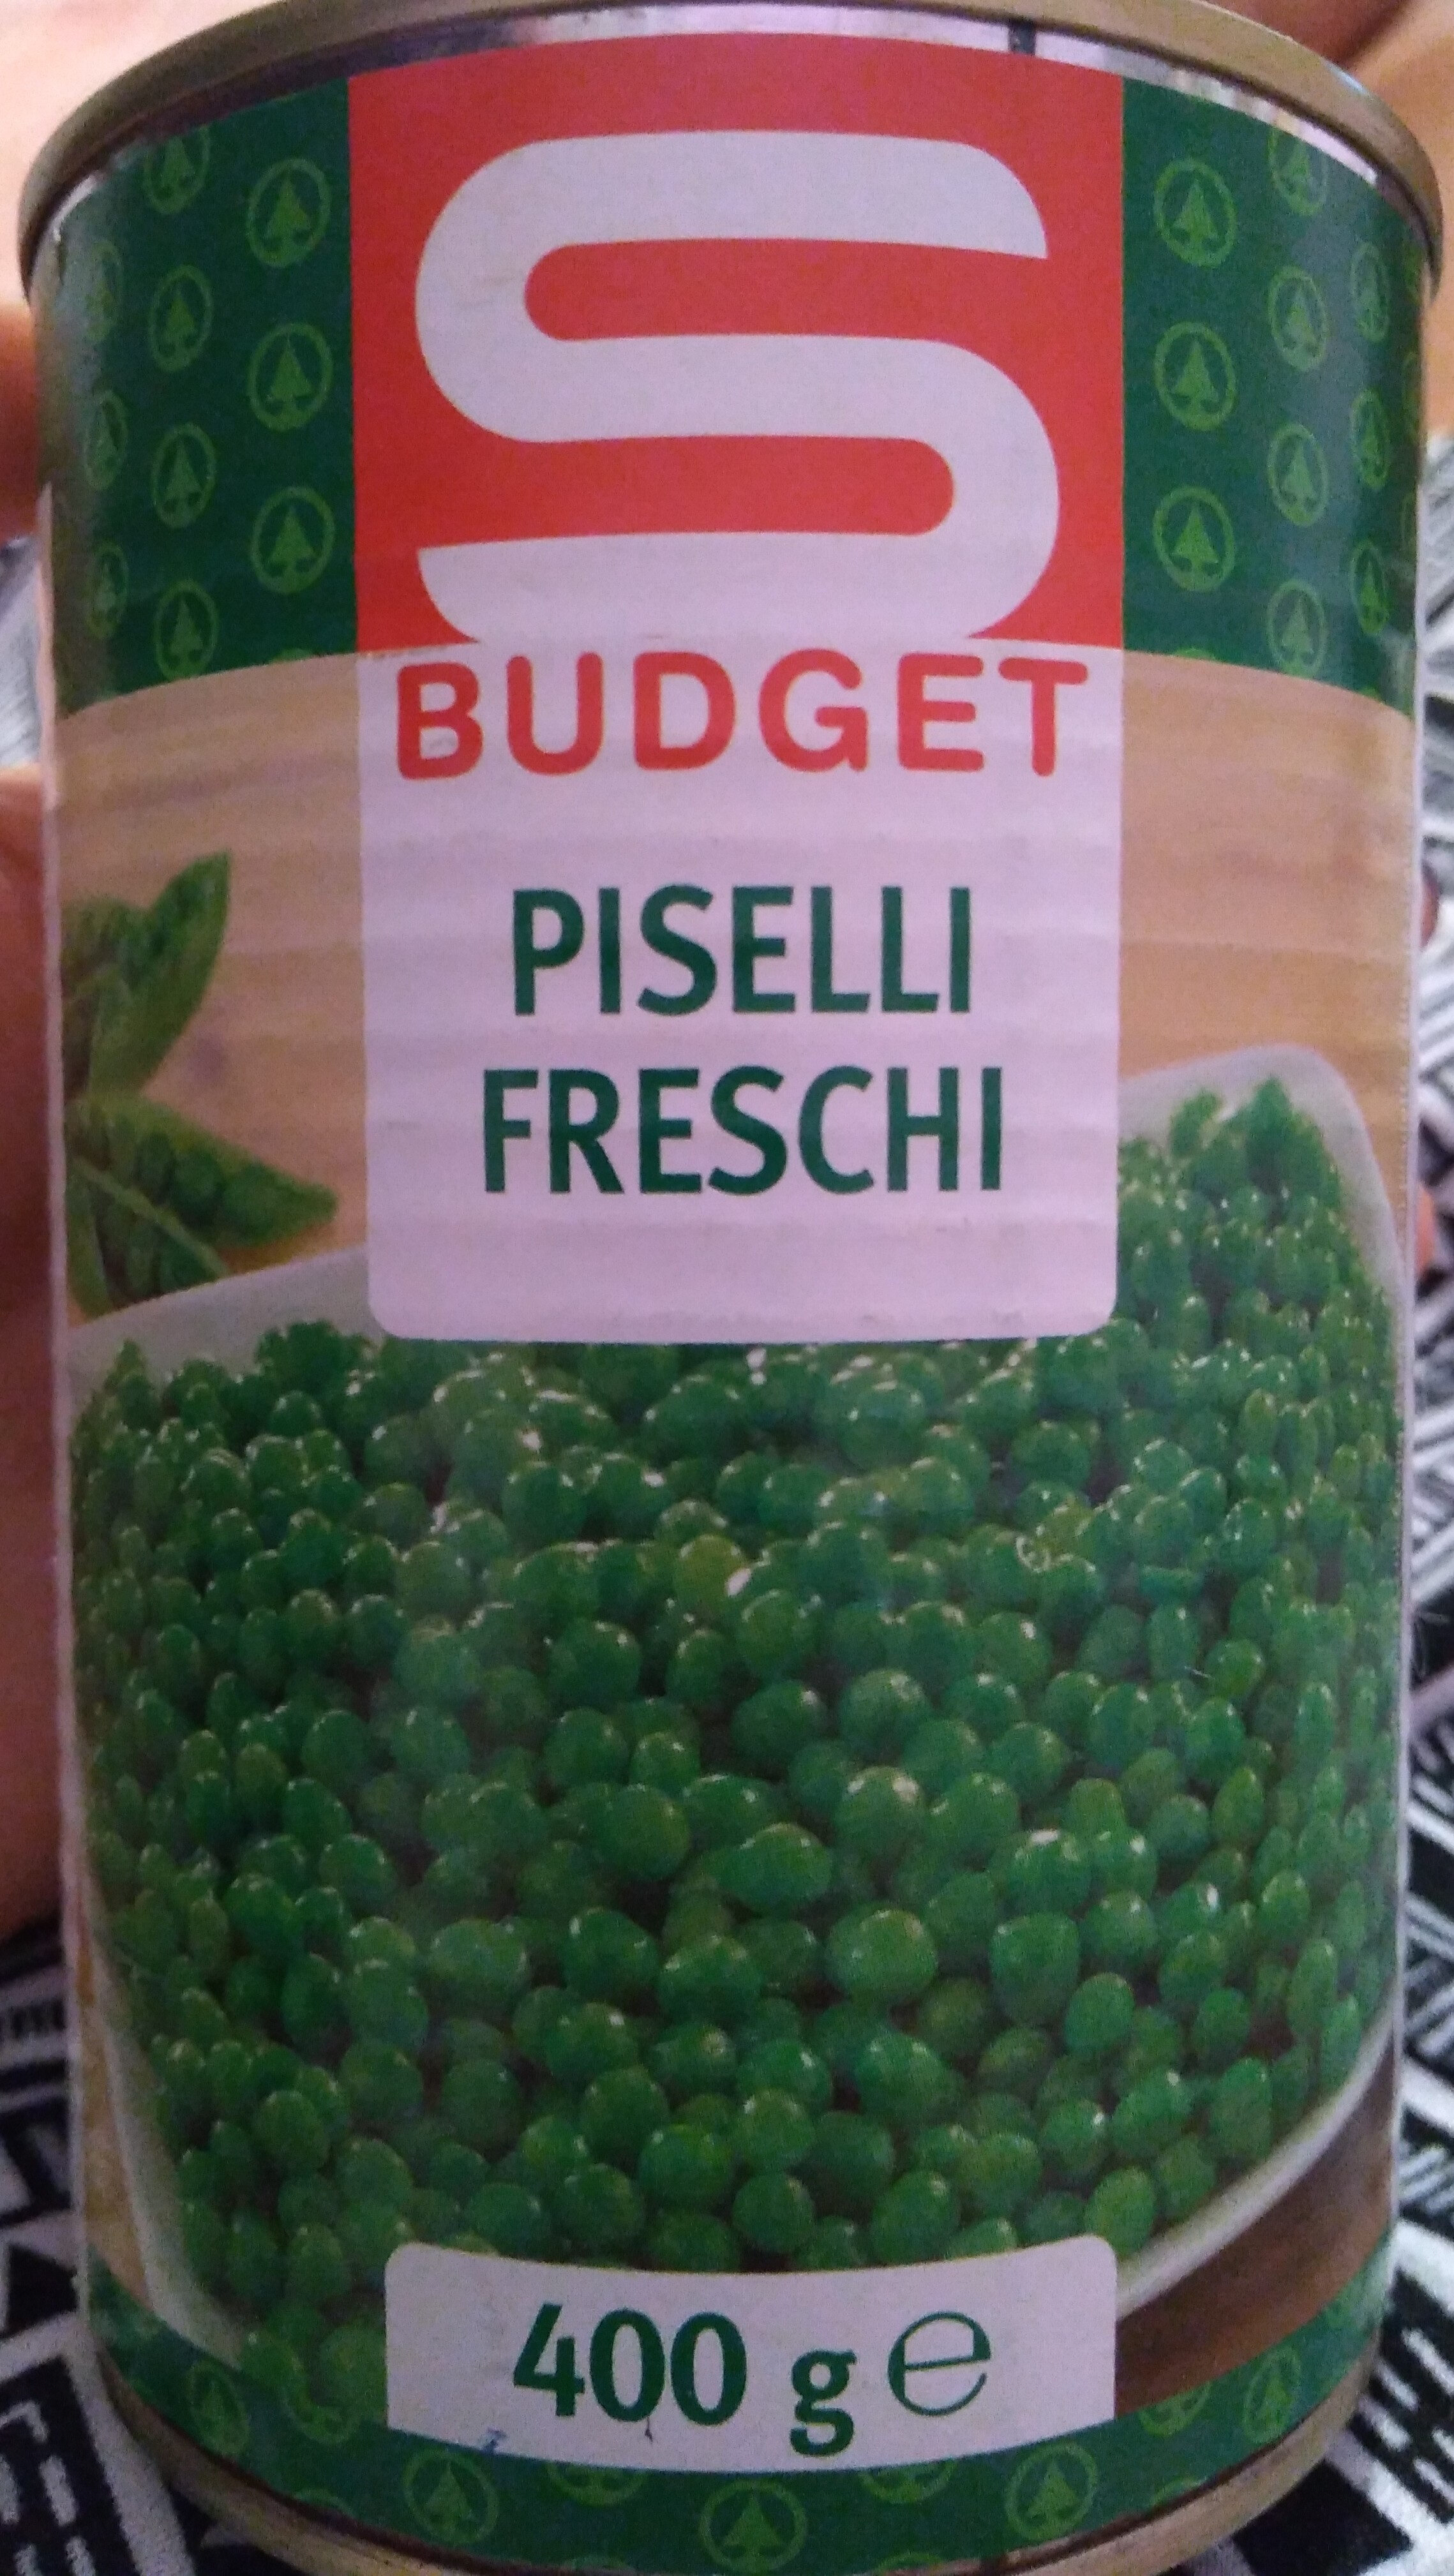 Piselli freschi Budget - Product - it